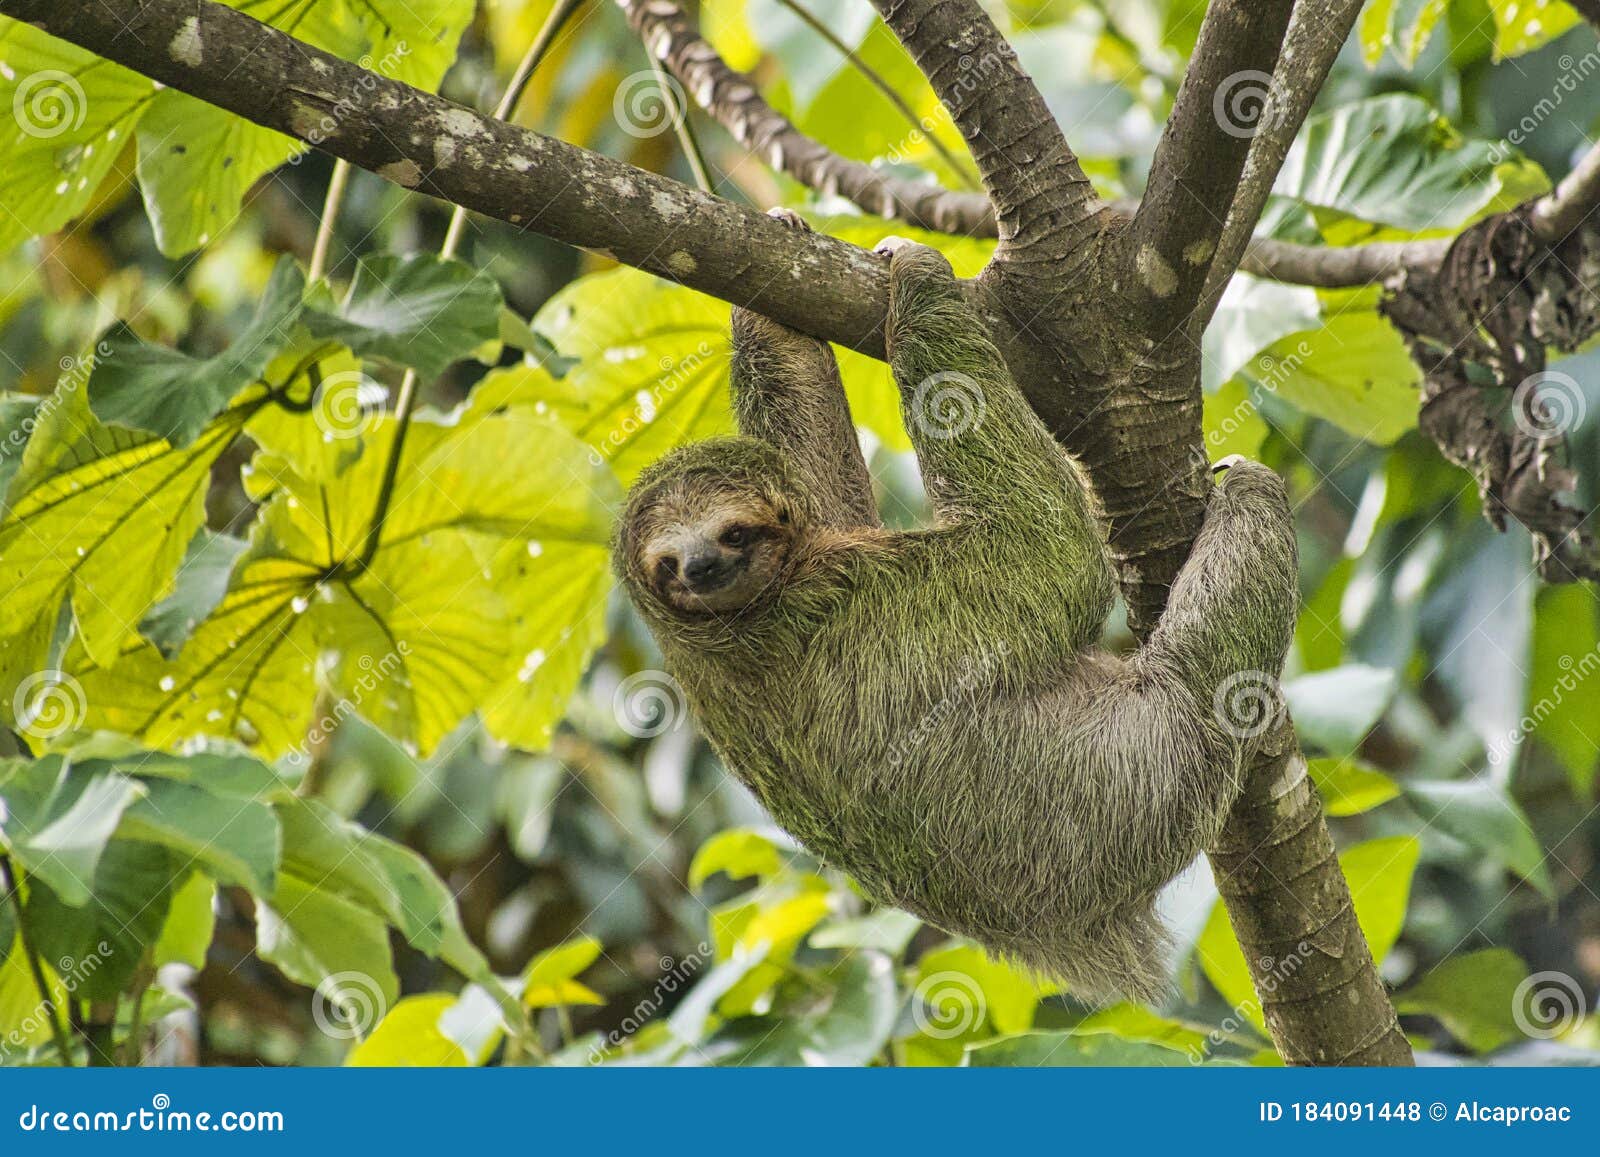 pale-throated sloth, bradypus tridactylus